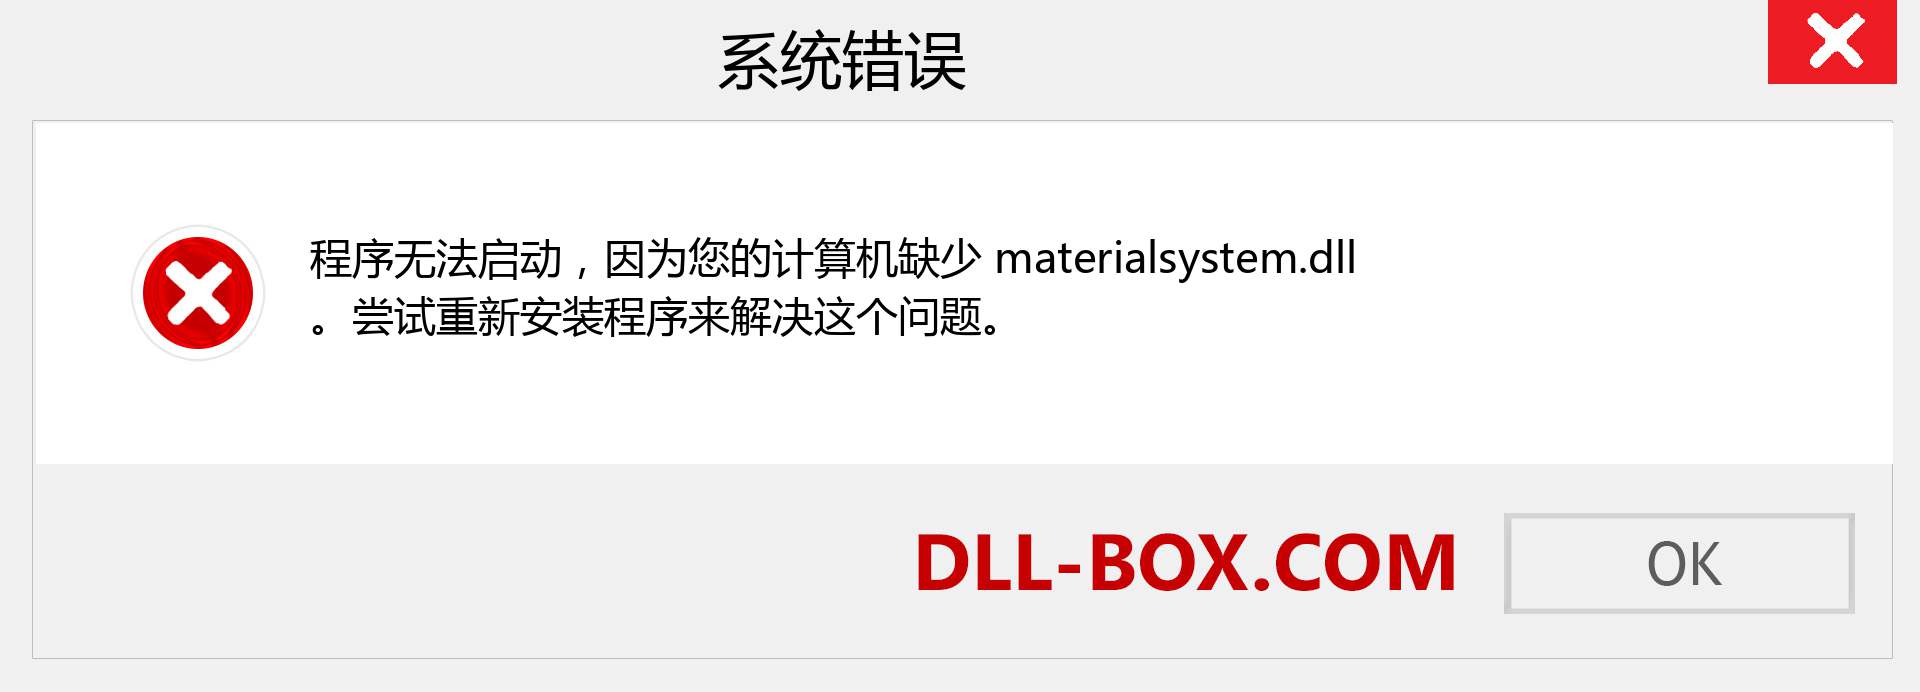 materialsystem.dll 文件丢失？。 适用于 Windows 7、8、10 的下载 - 修复 Windows、照片、图像上的 materialsystem dll 丢失错误